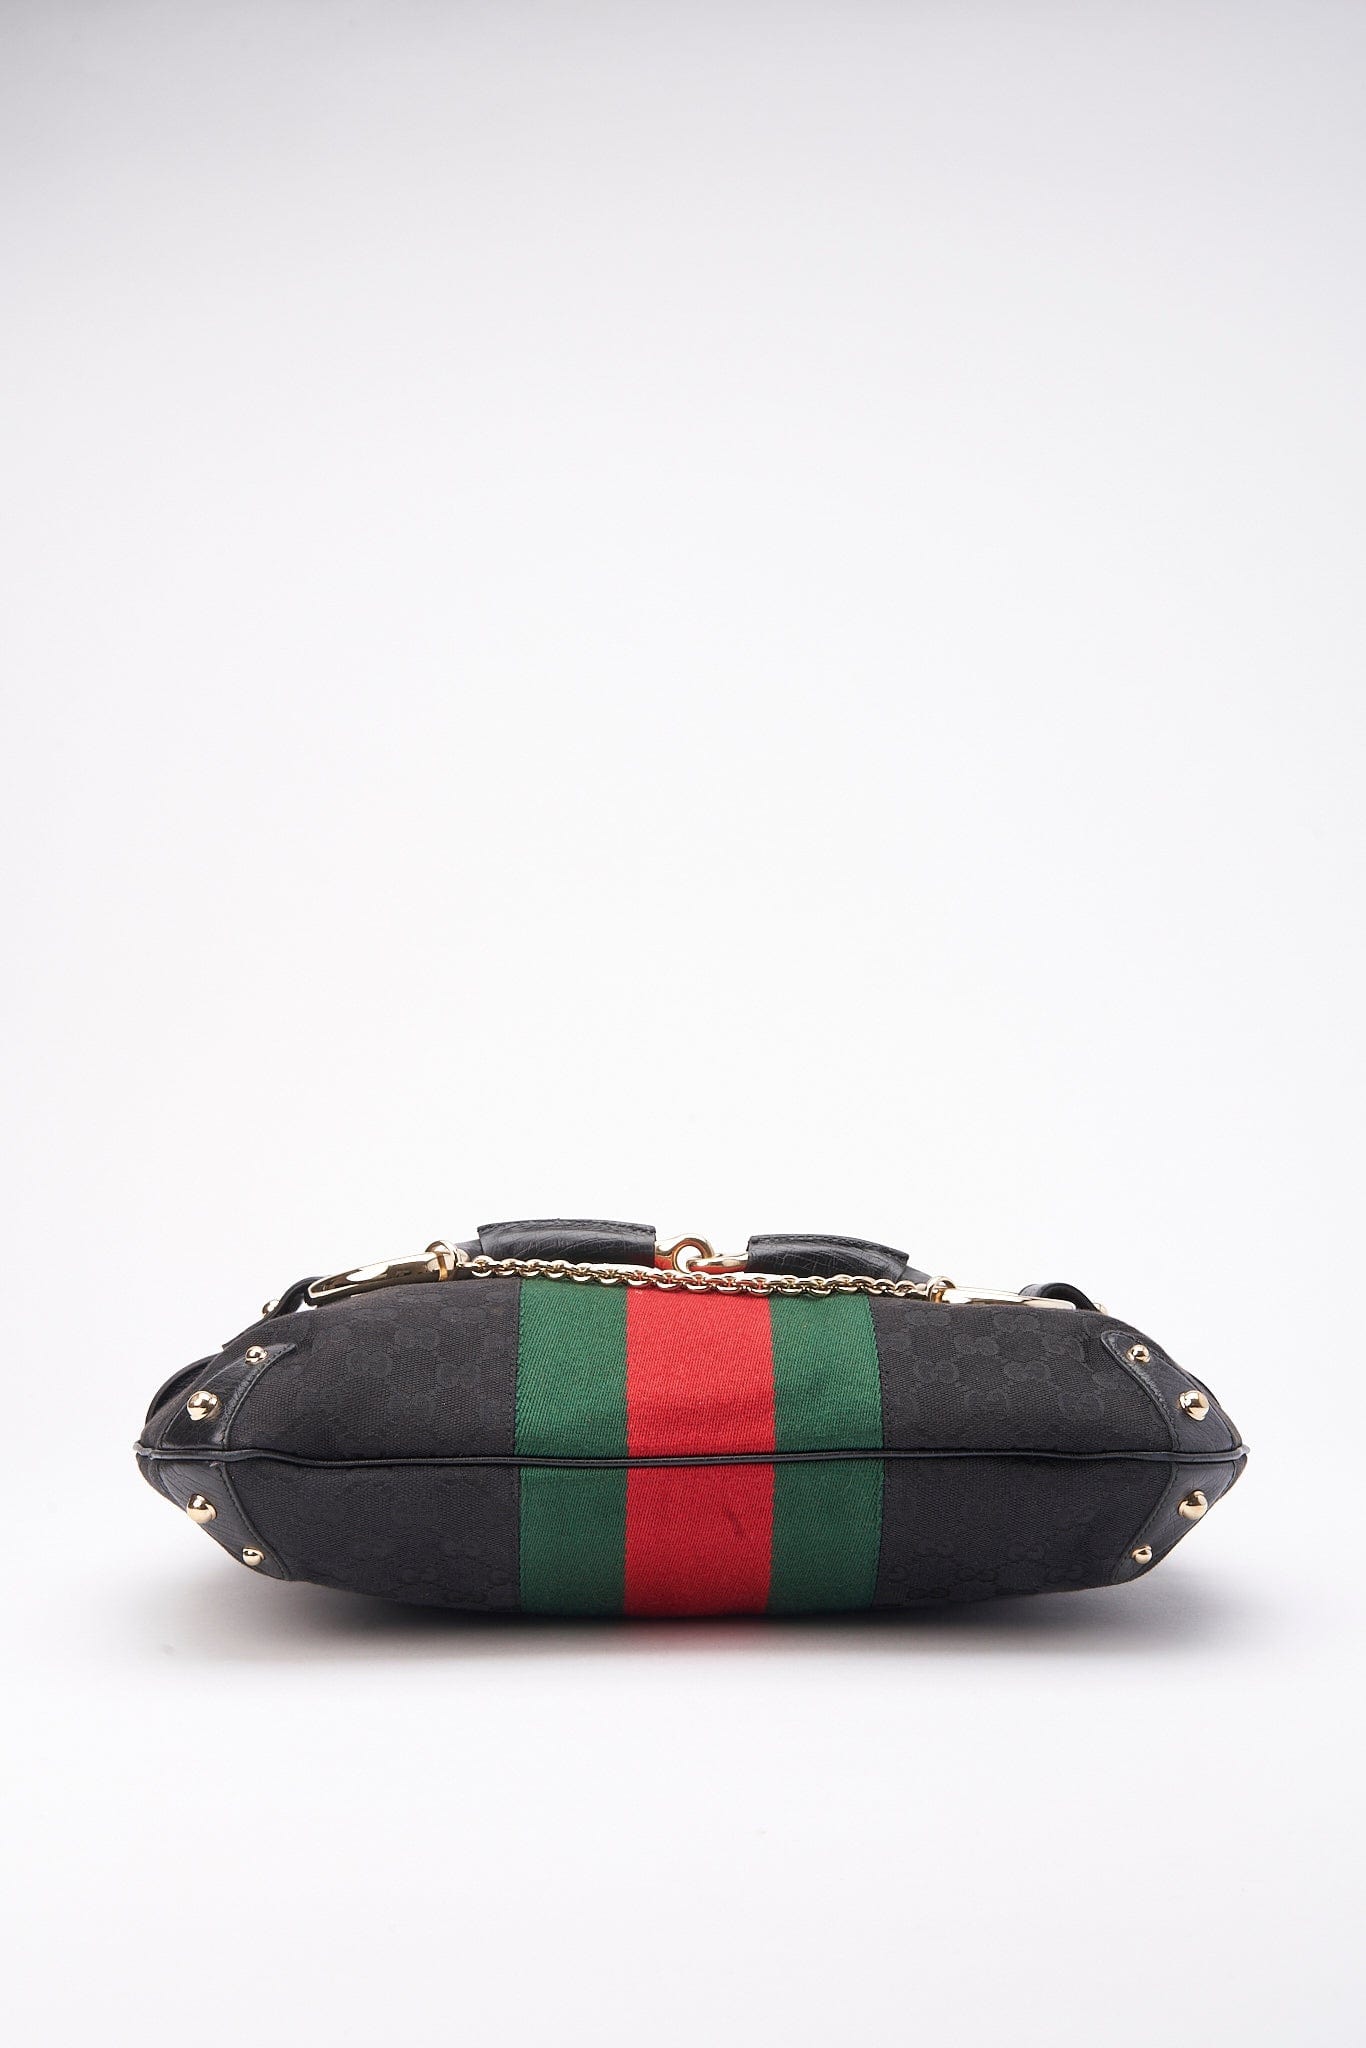 Vintage Gucci Bag w Horsebit Hardware